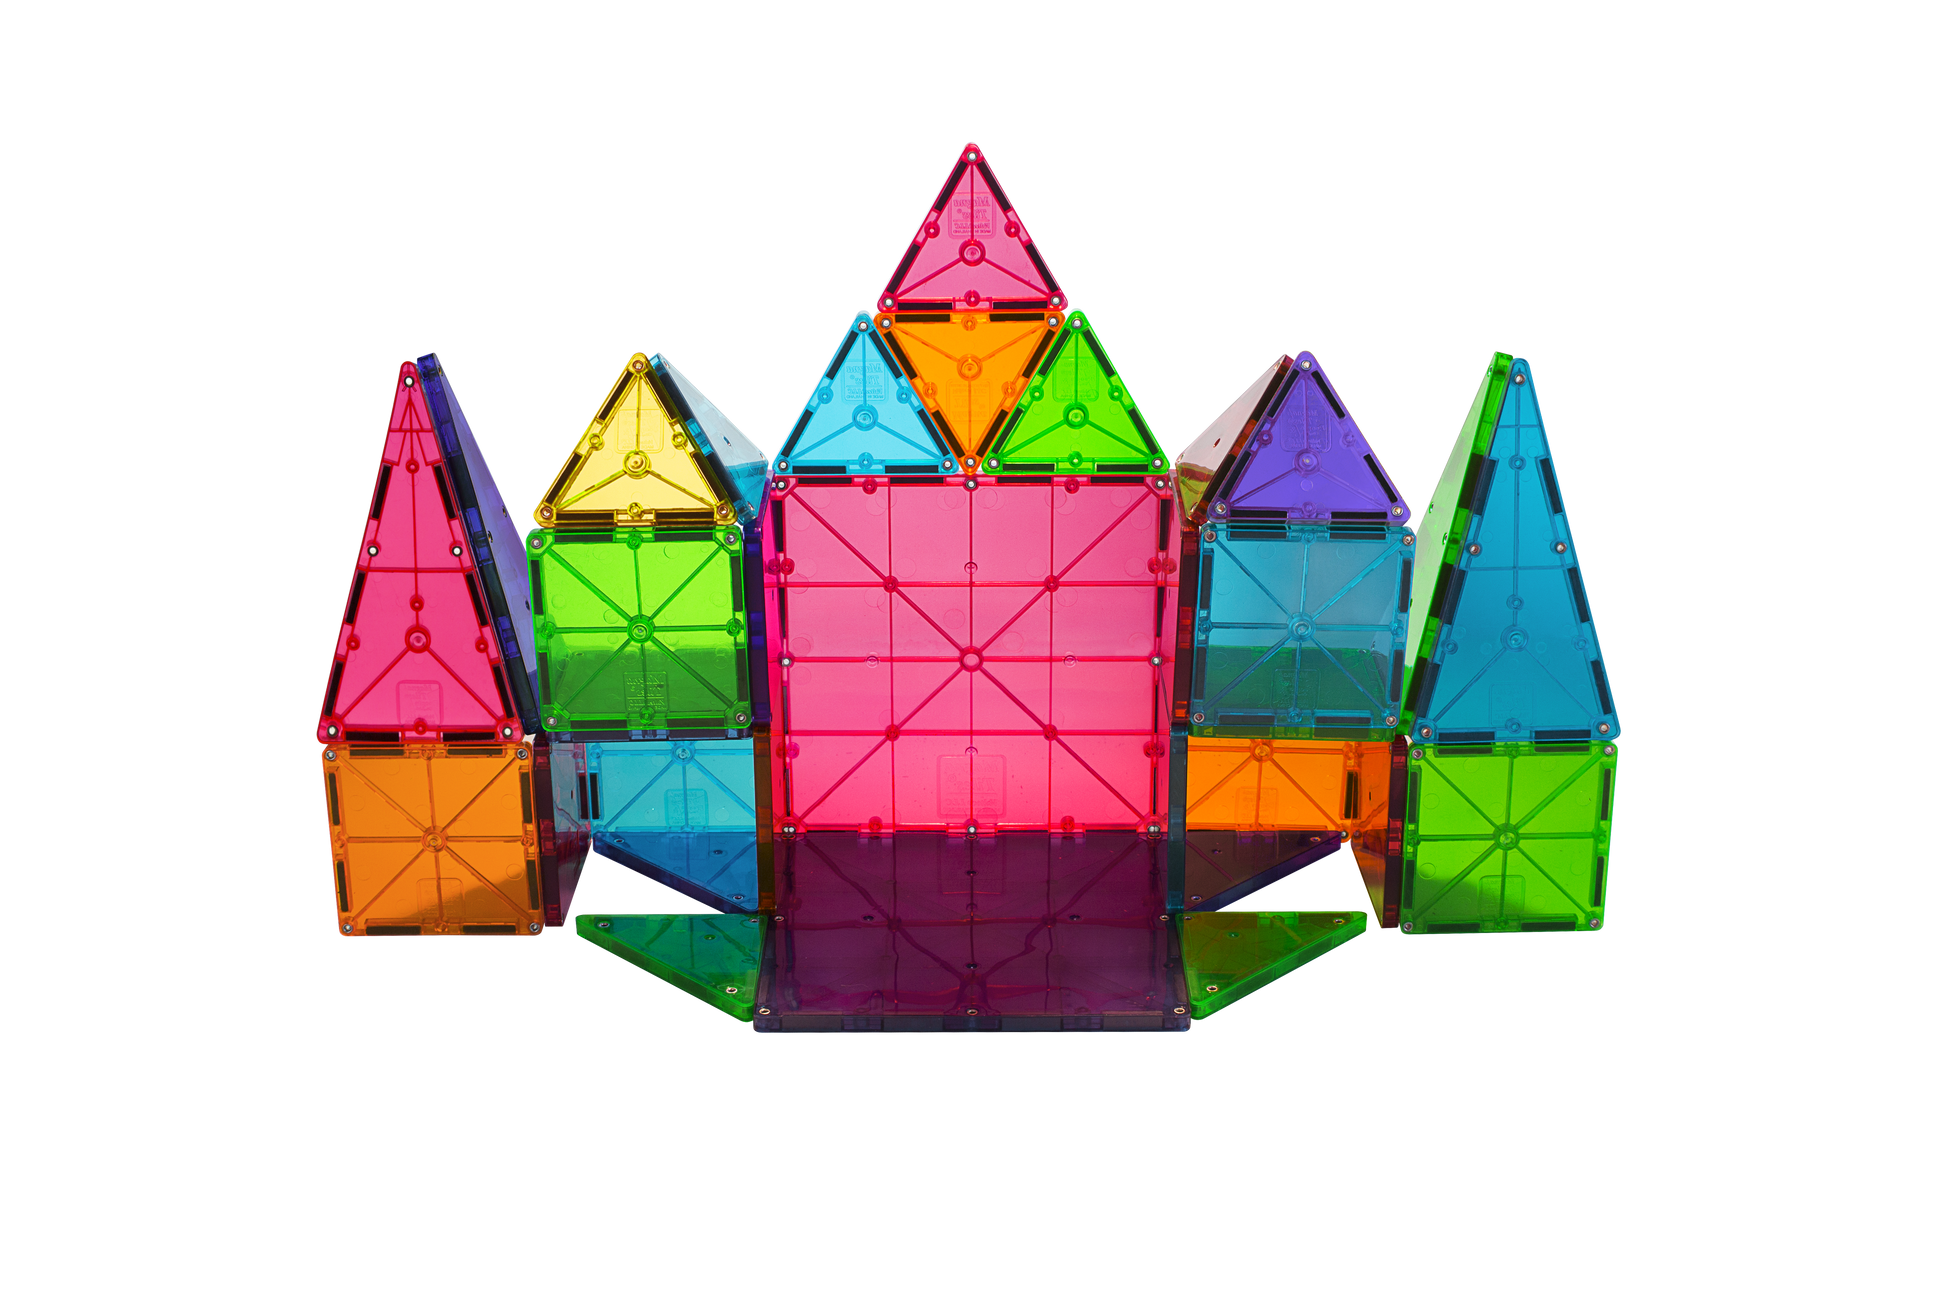 Classic 32-Piece Magna Tiles Kids Building Set